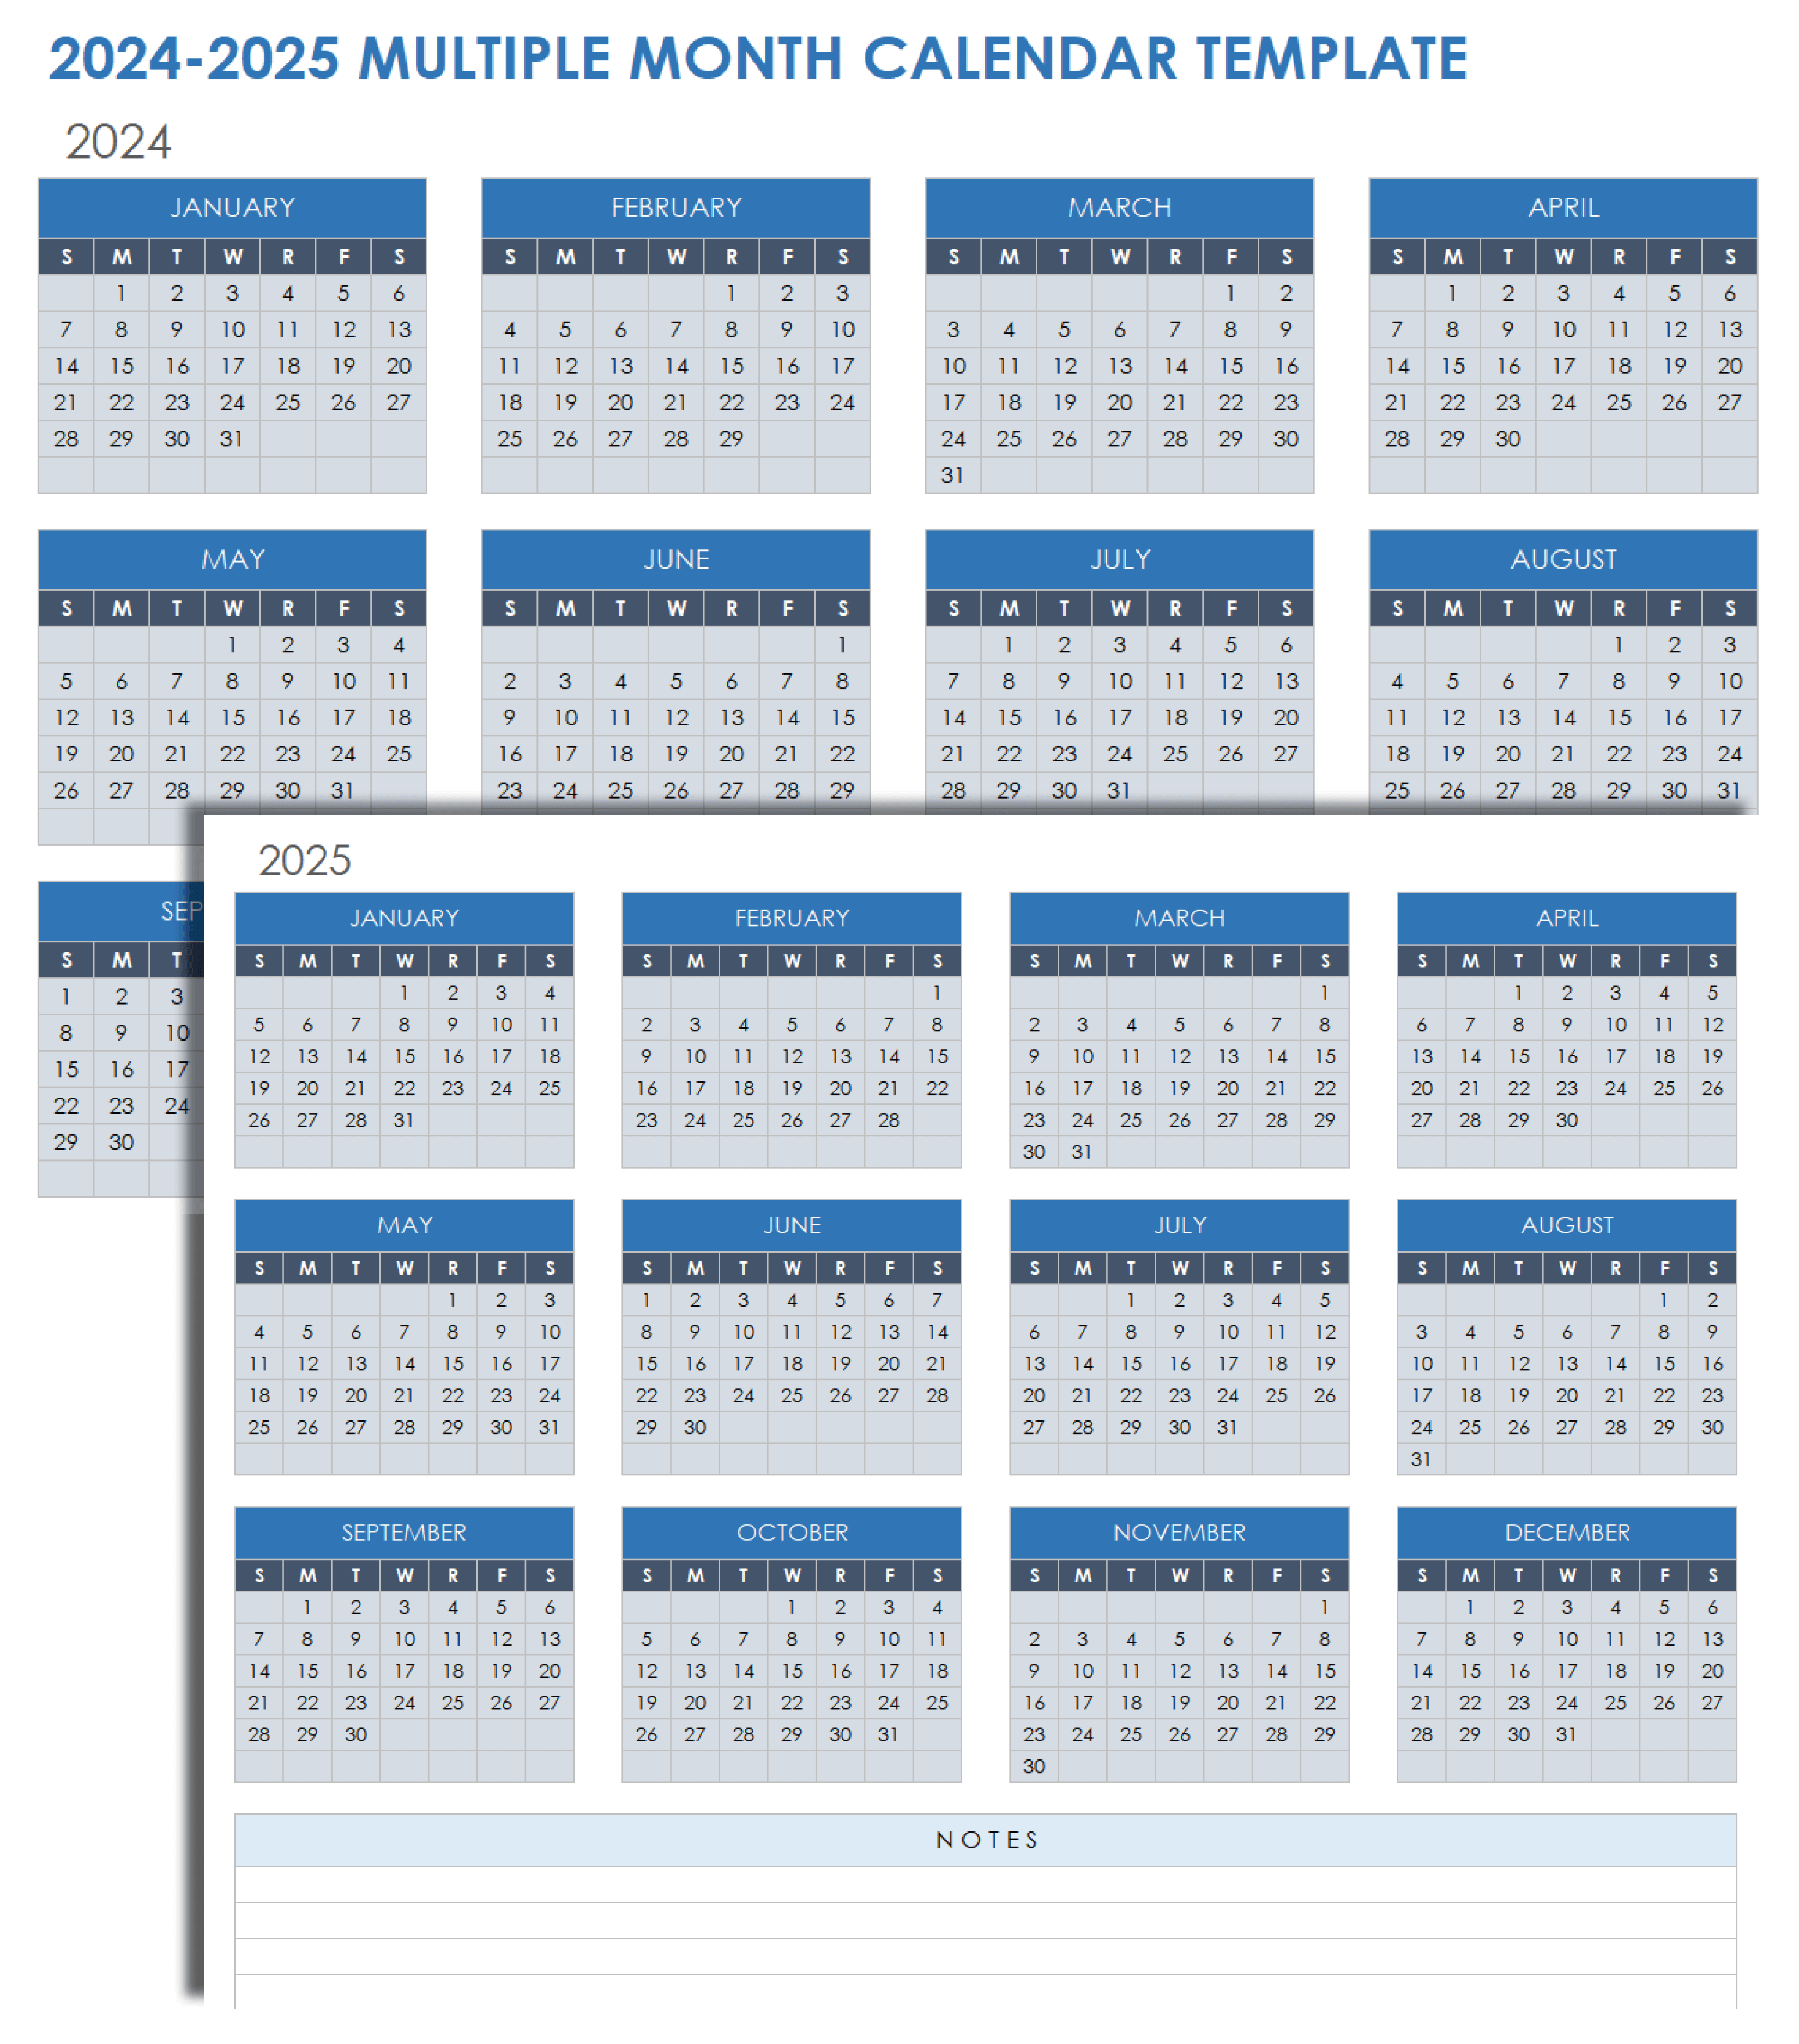 2024-2025 Multiple Month Calendar Template